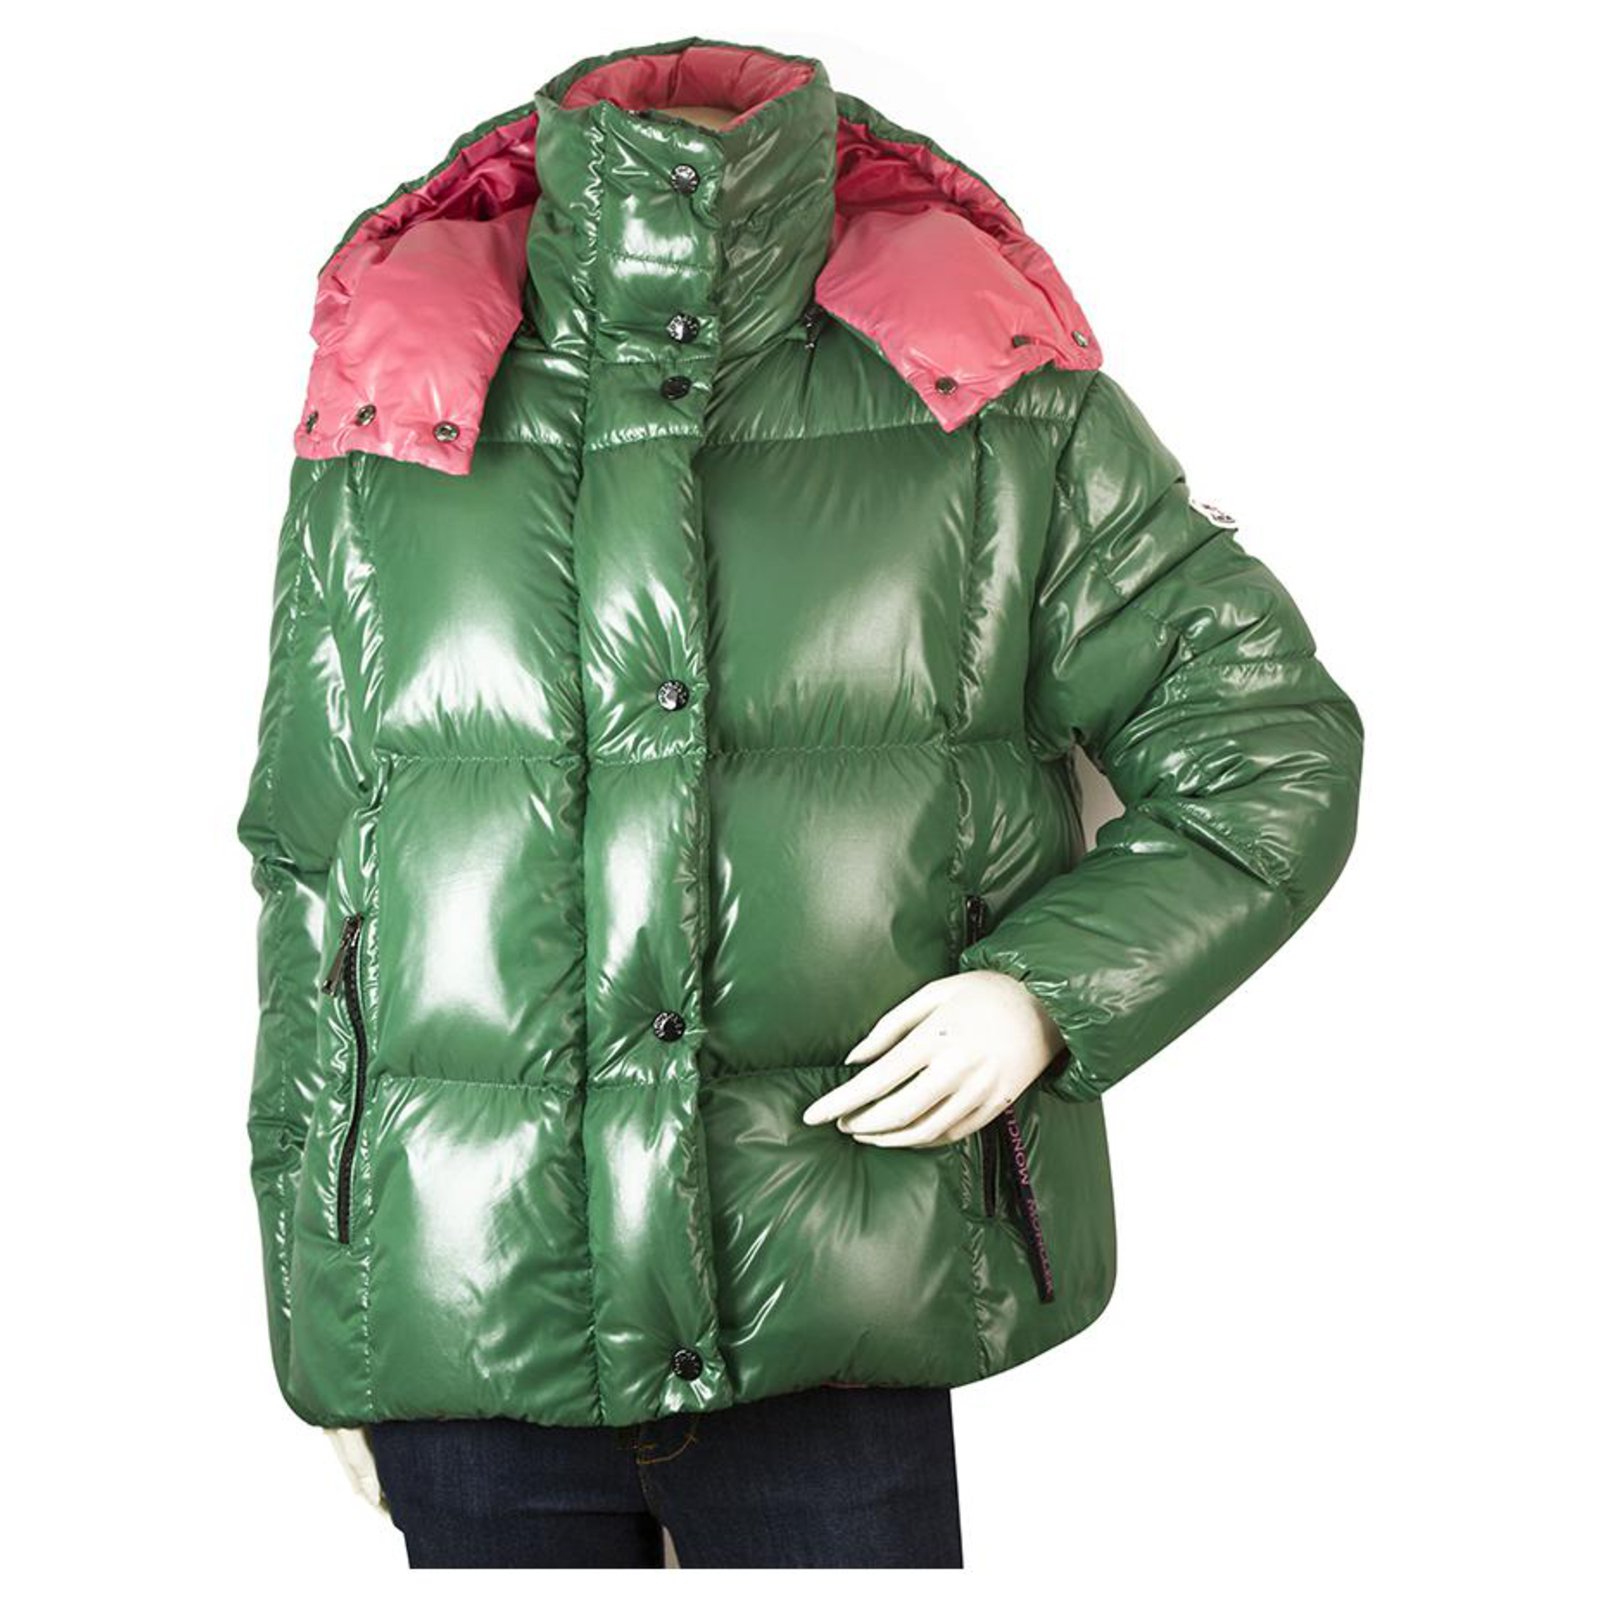 moncler jacket size